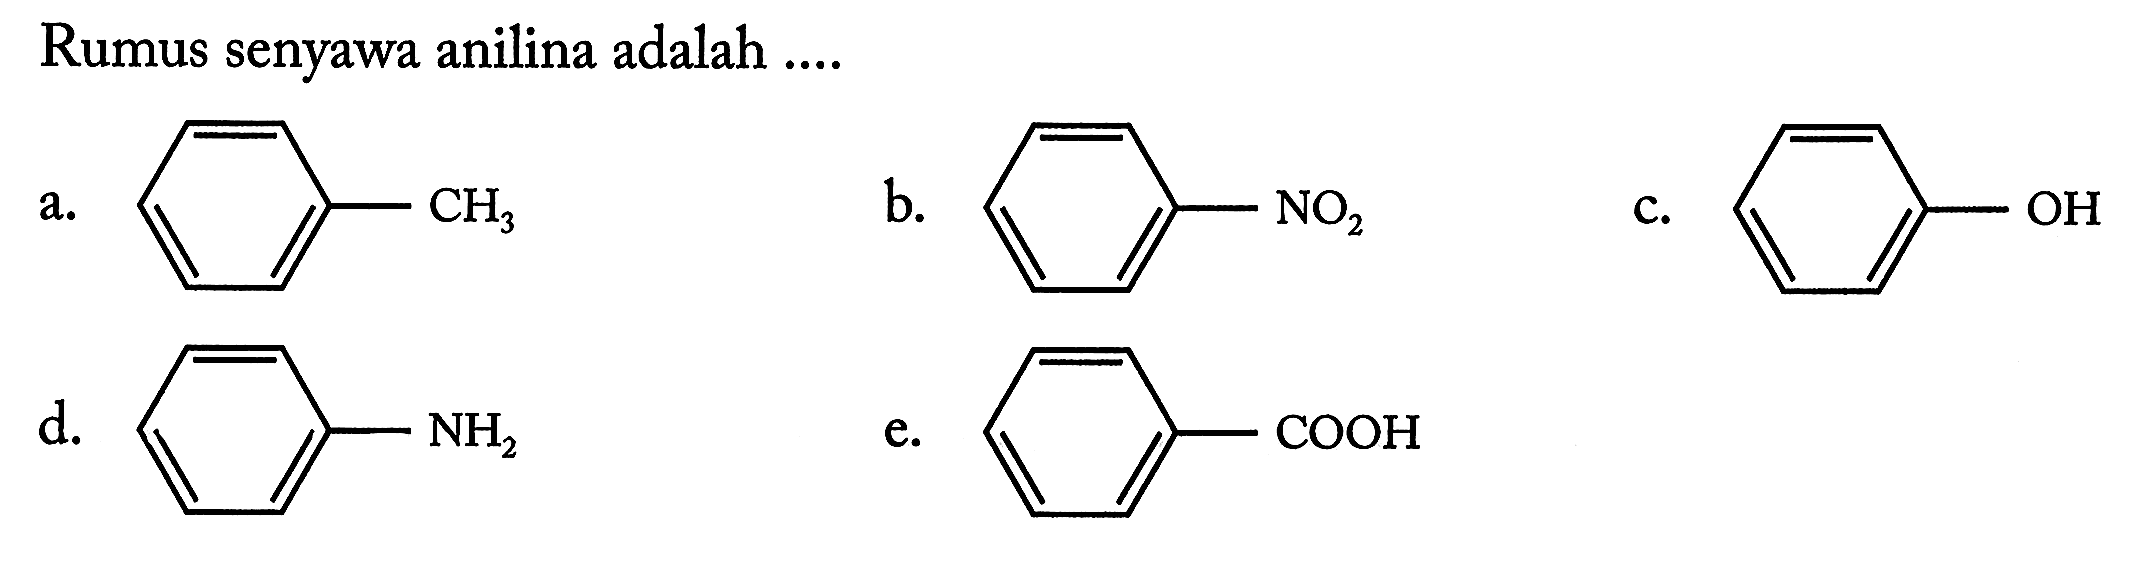 Rumus senyawa anilina adalah ....
a. Benzena - CH3 
b. Benzena - NO2 
c. Benzena - OH 
d. Benzena - NH2 
e. Benzena - COOH 